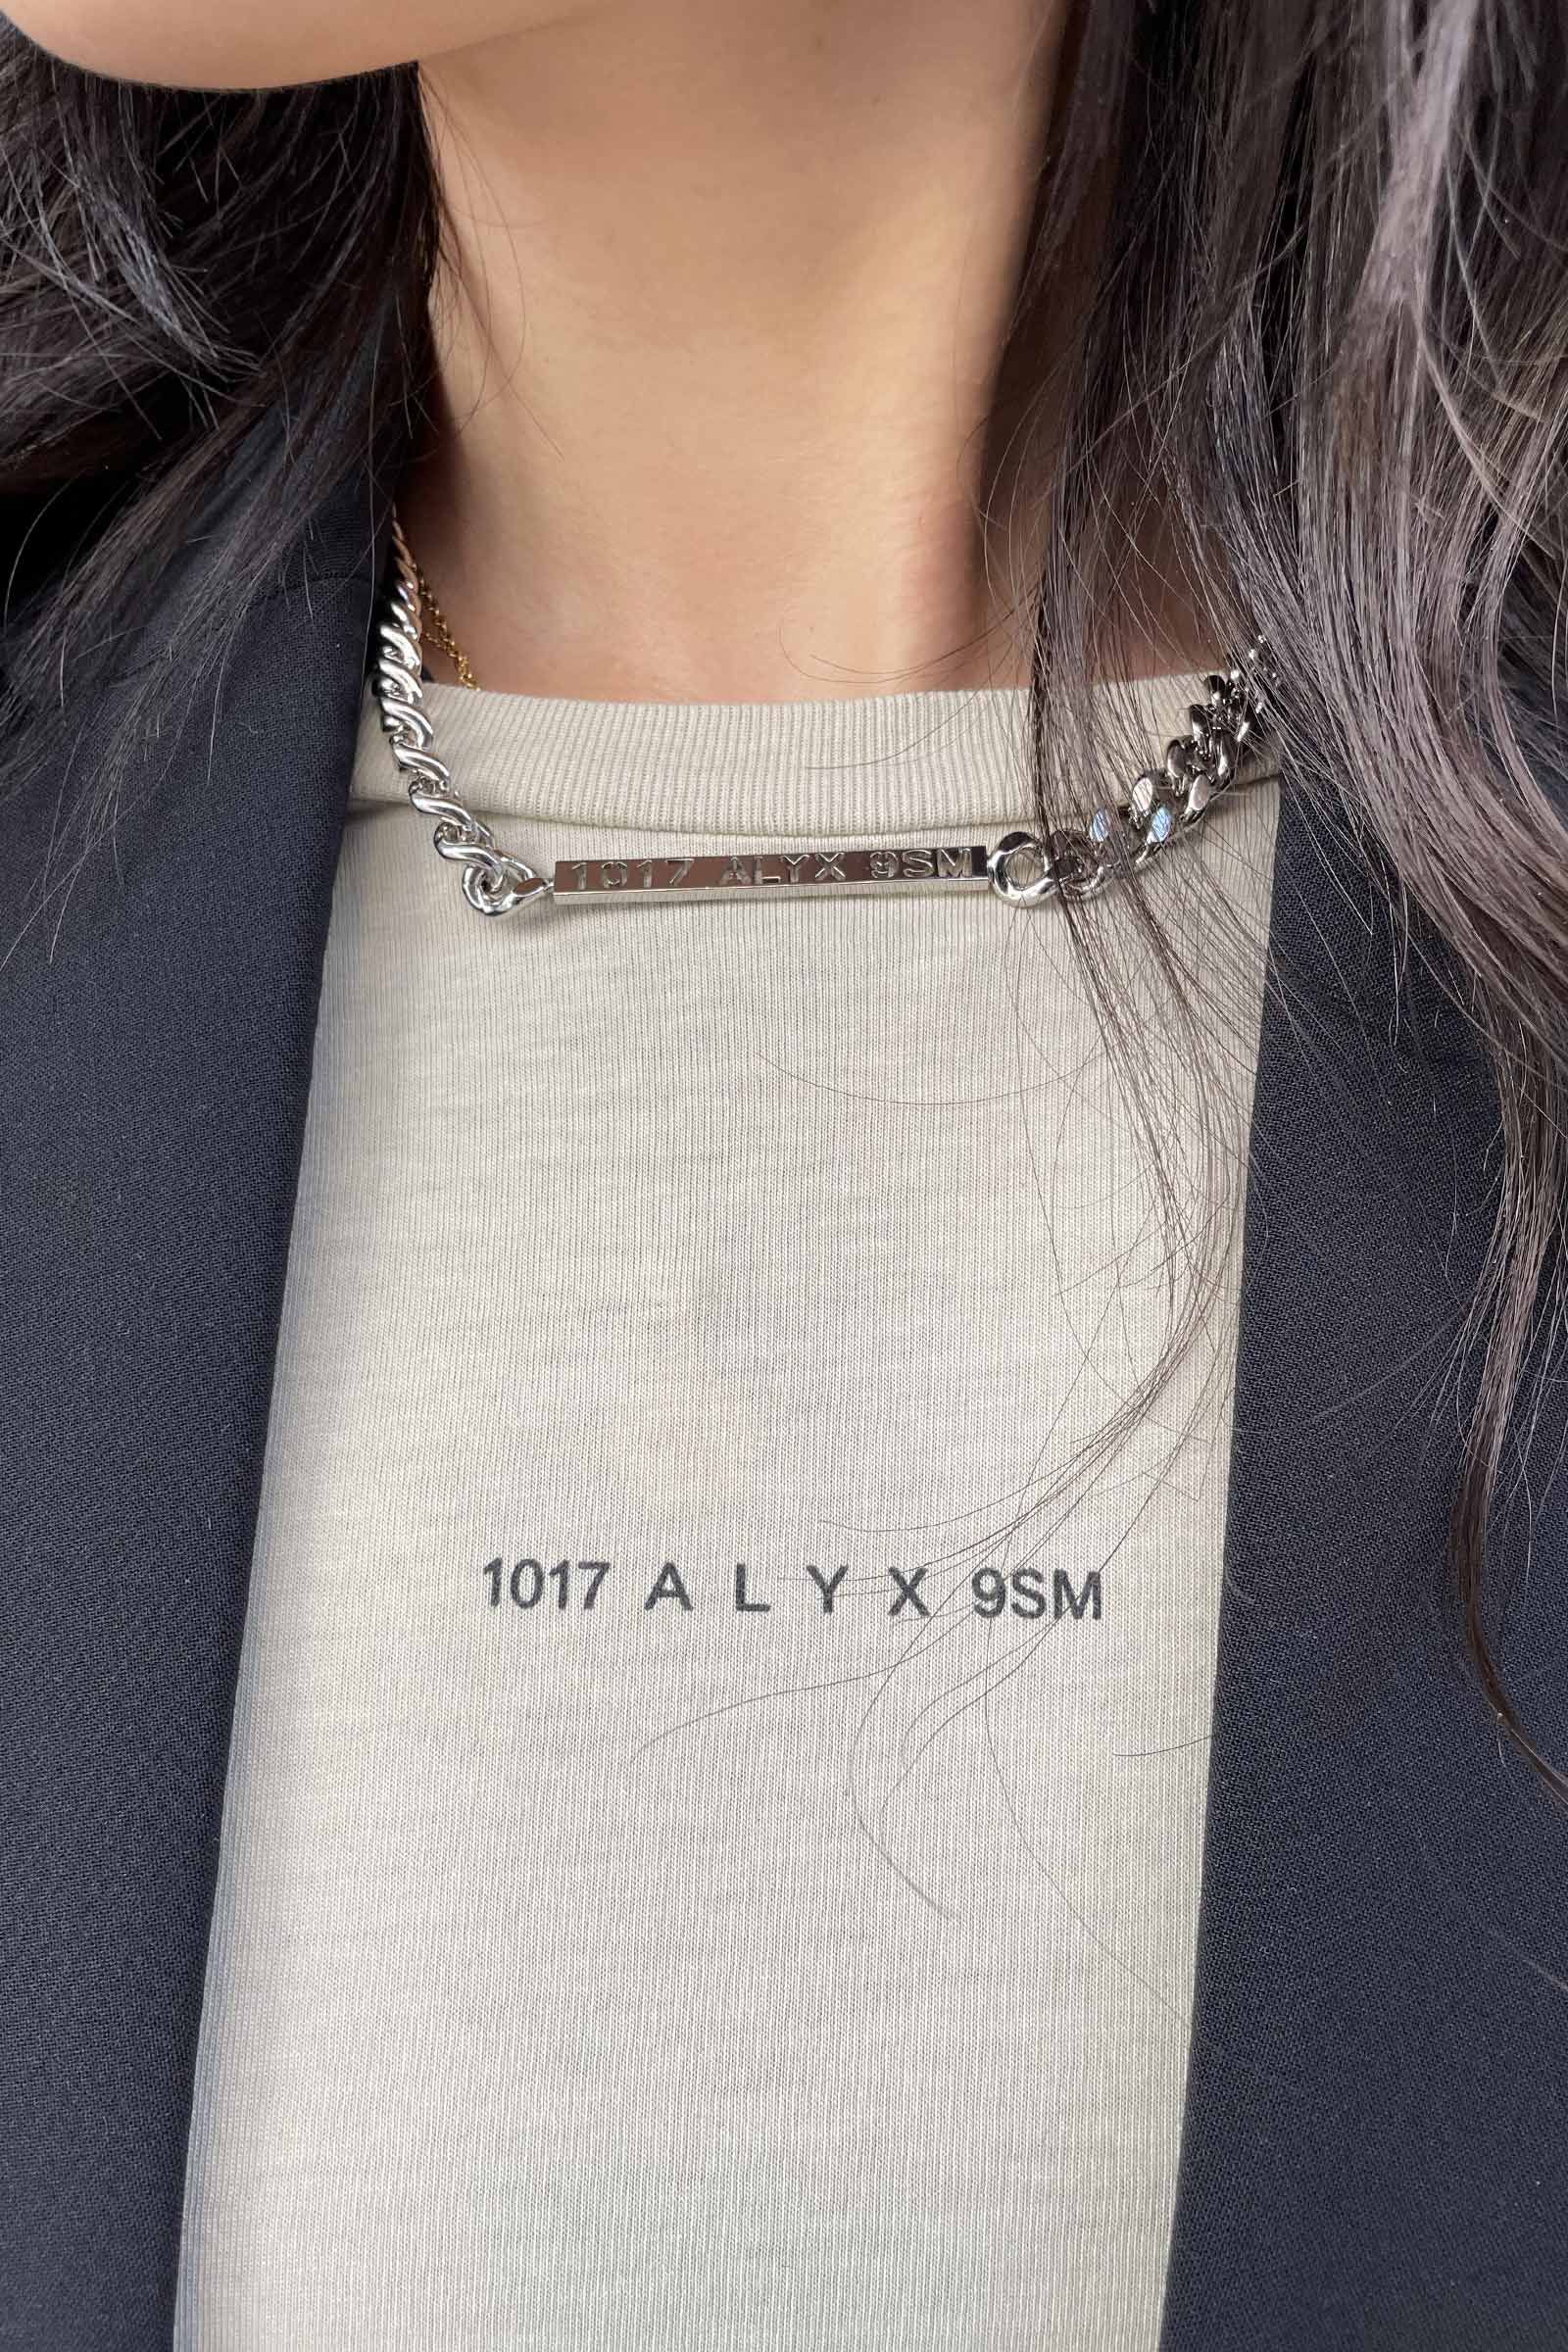 1017 ALYX 9SM BUCKLE NECKLACE silver | Detail